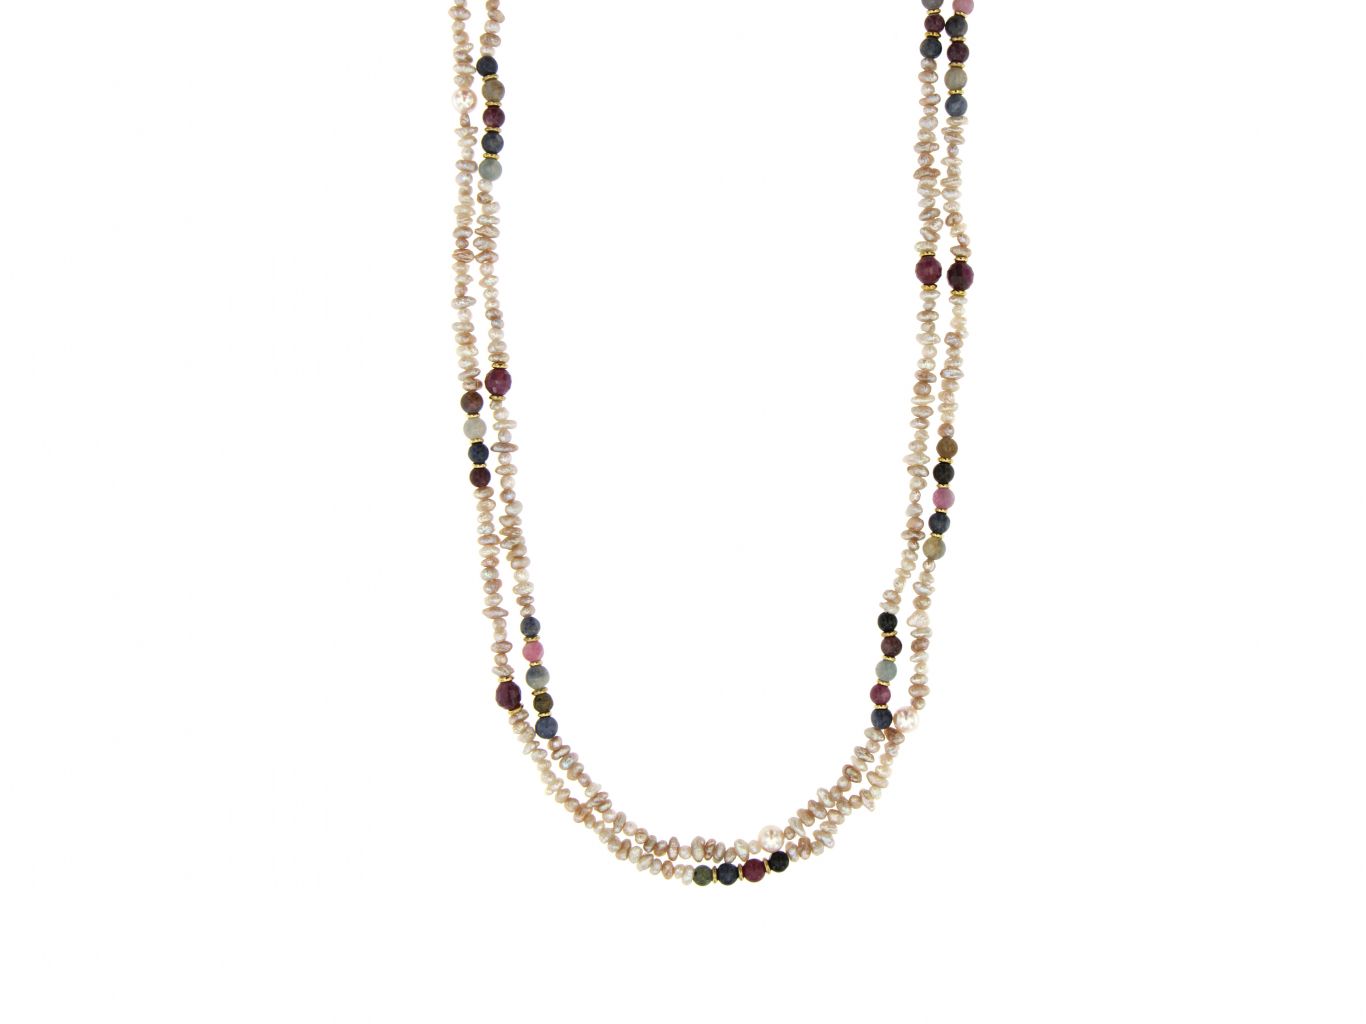 Collana in perle Akoya, perle Keshi e zaffiri, inserti e chiusura oro 750